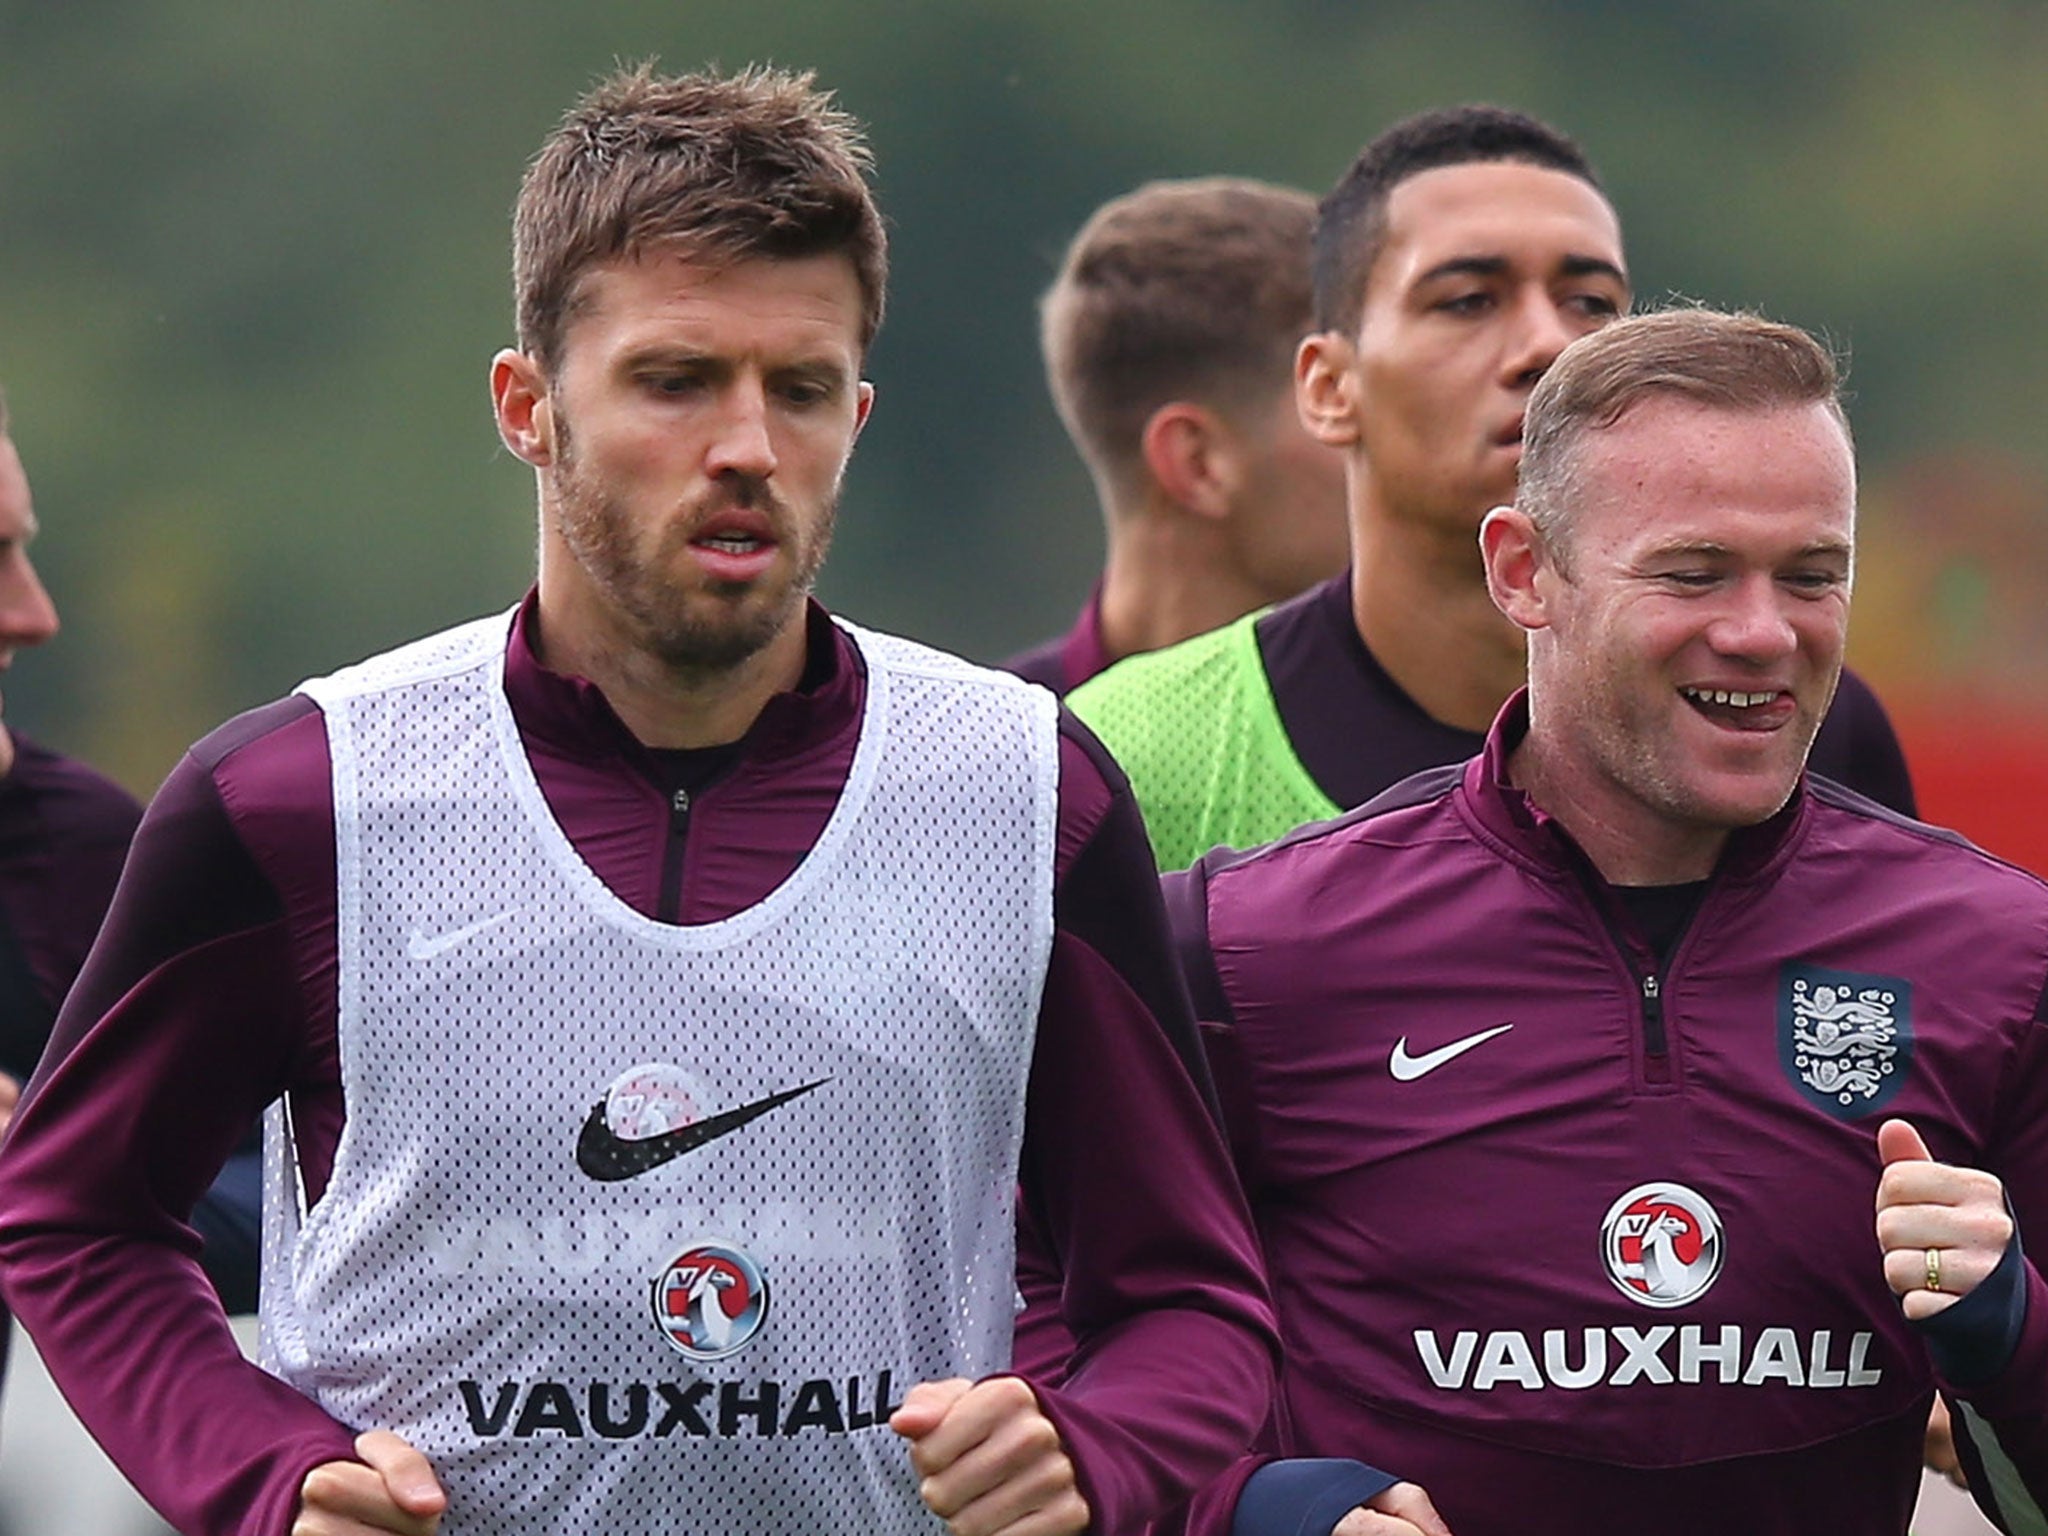 Michael Carrick alongside Wayne Rooney during England training